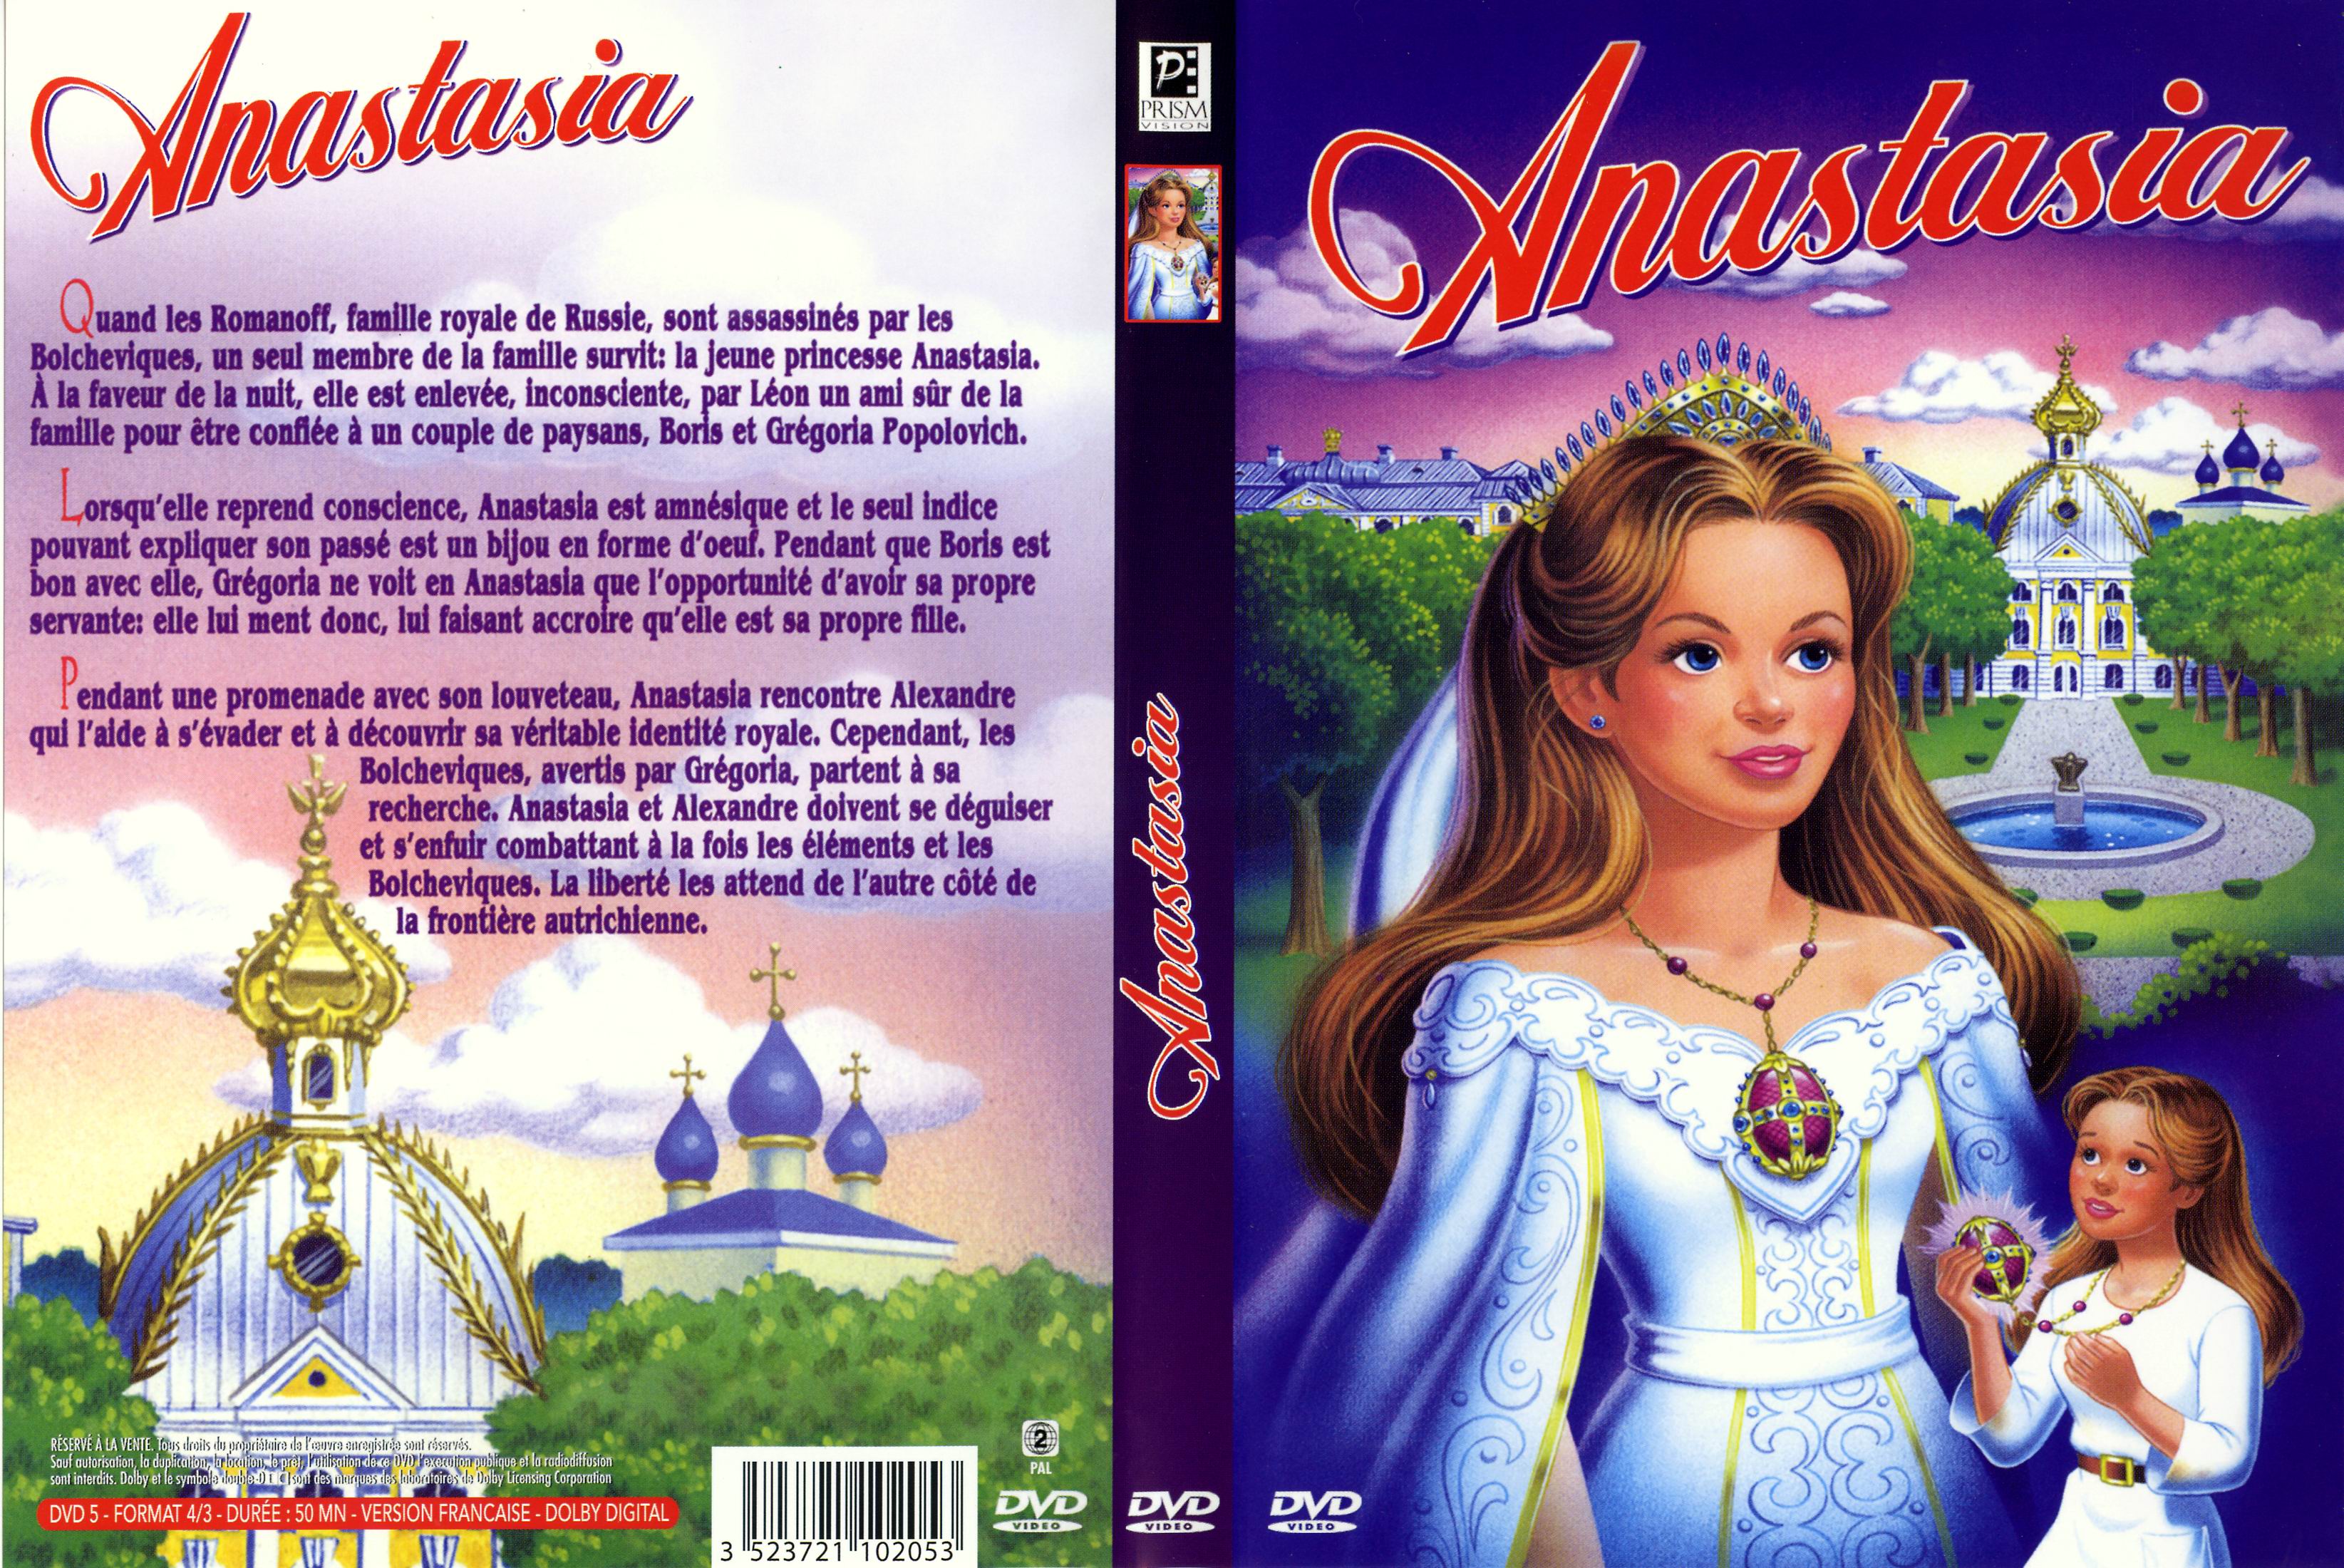 Jaquette DVD Anastasia (DA)